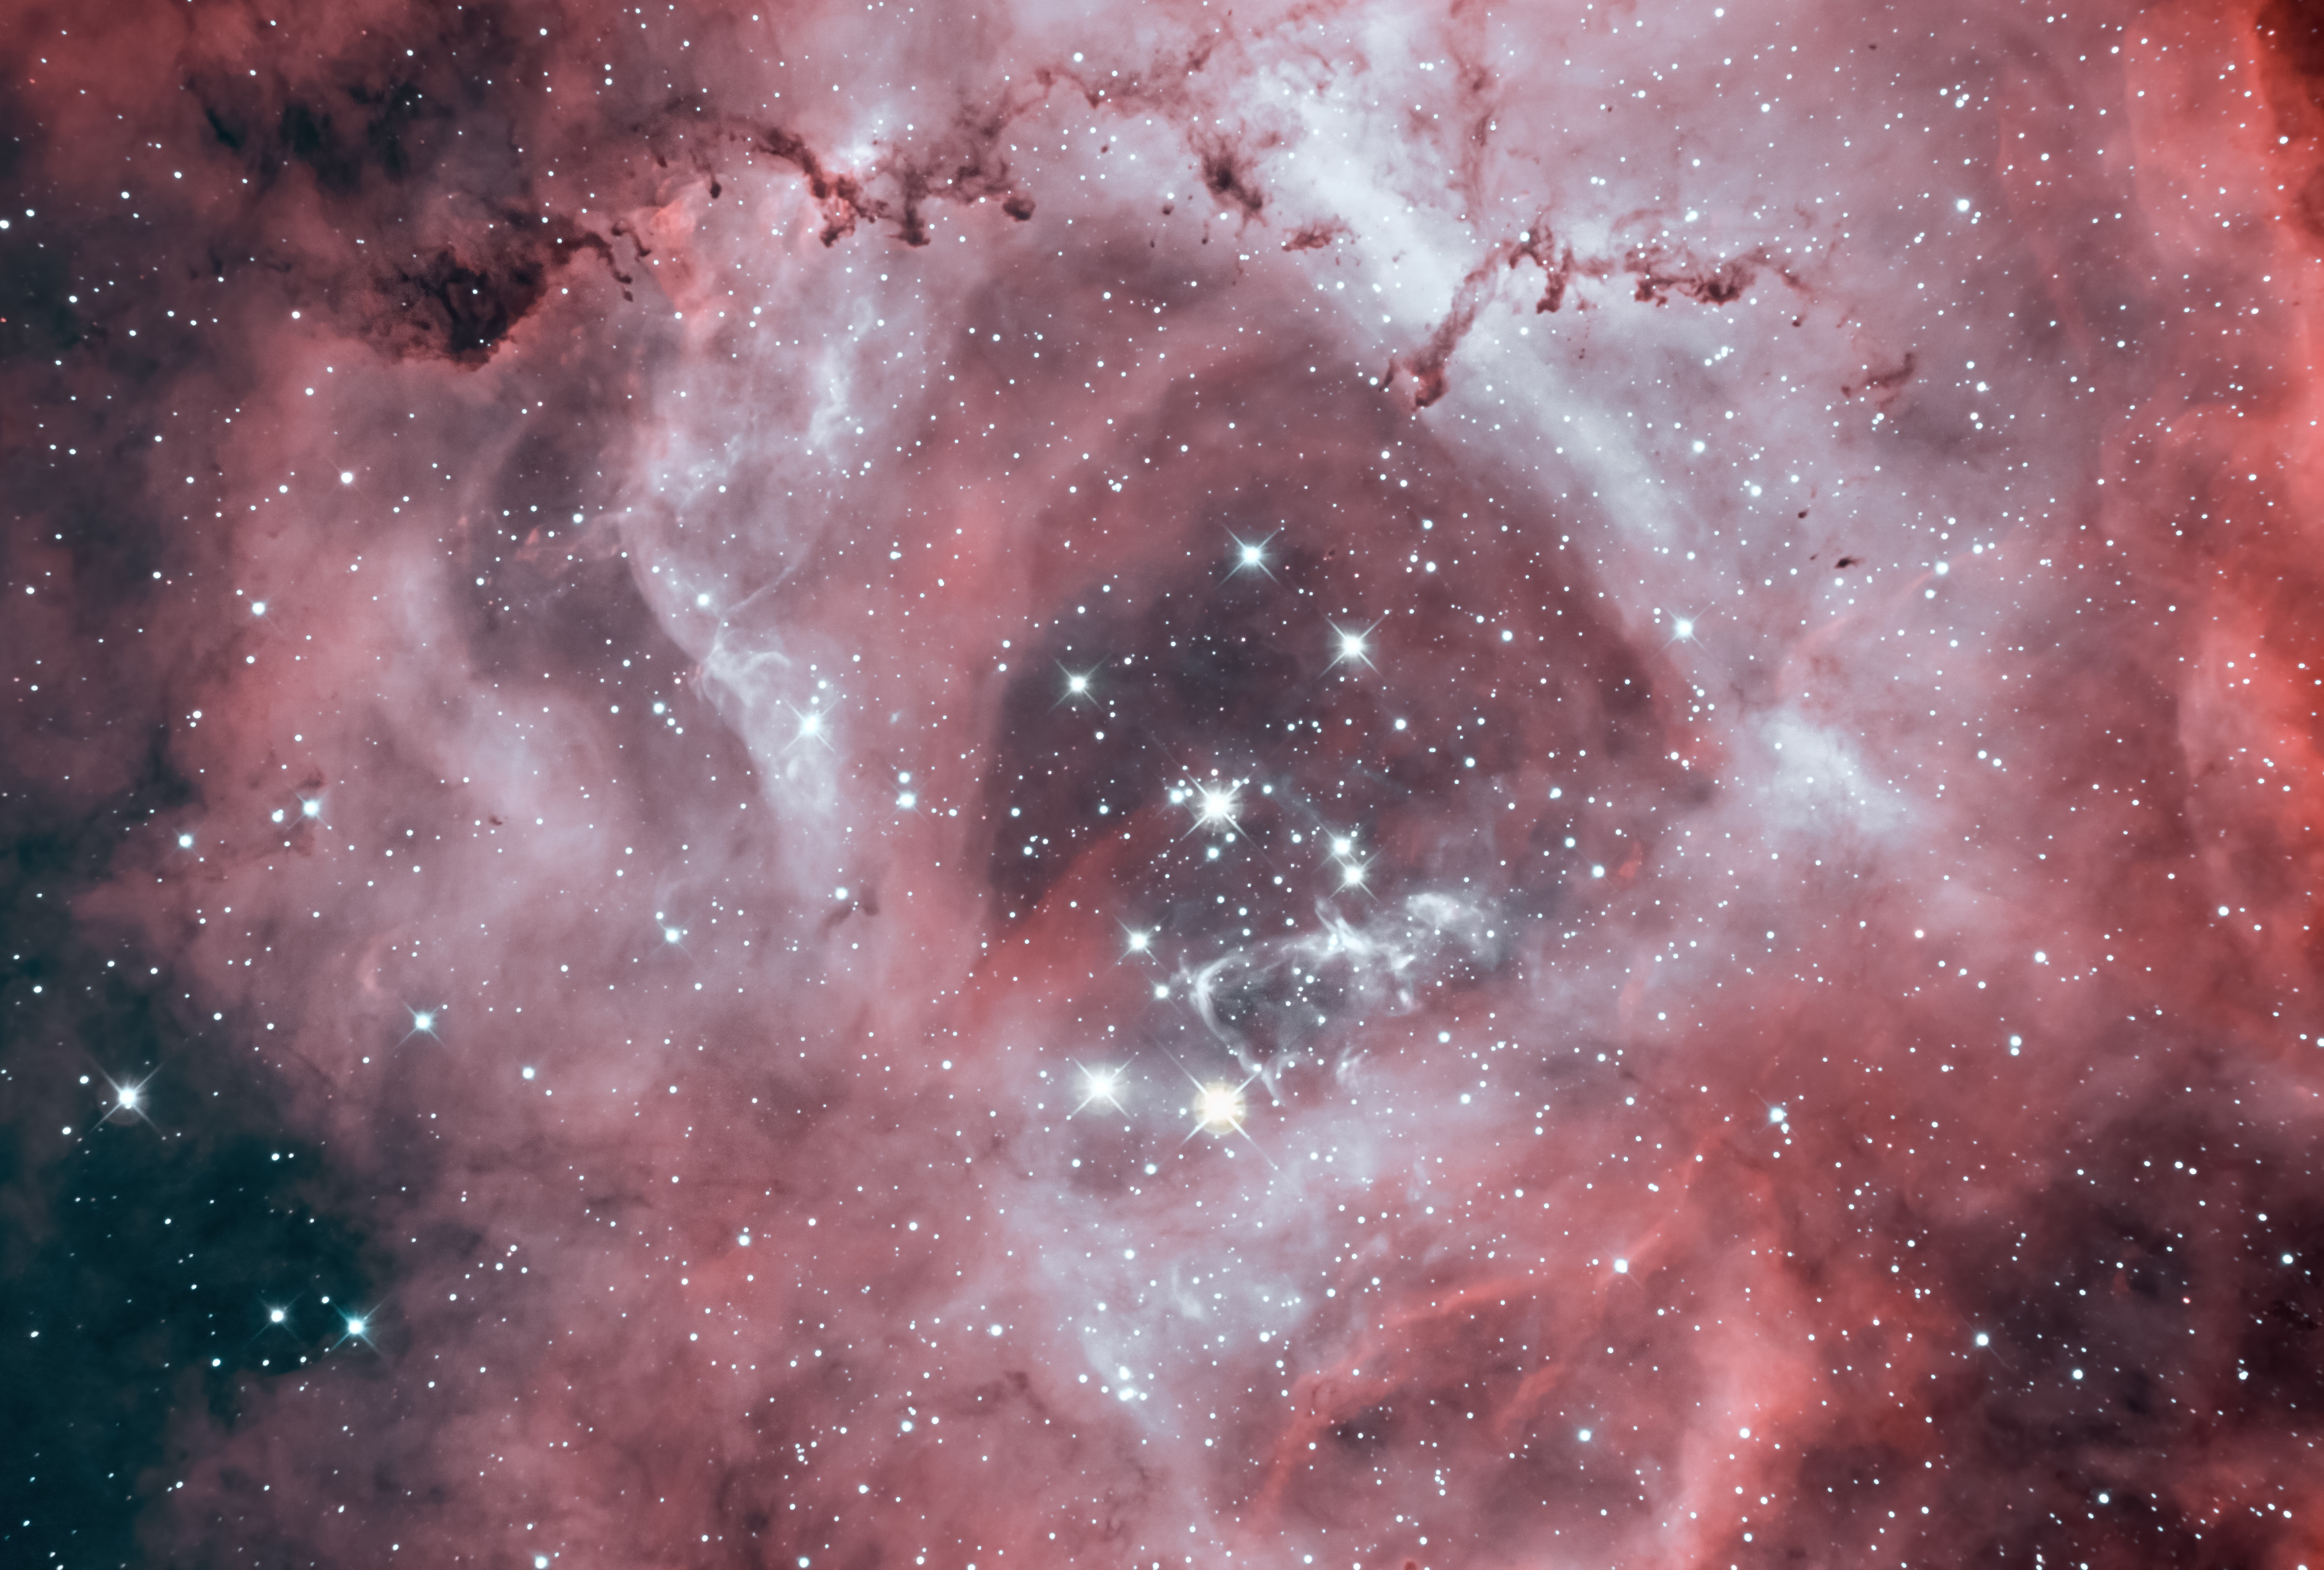 Au cœur de Caldwell 49 (Rosette) M7ju